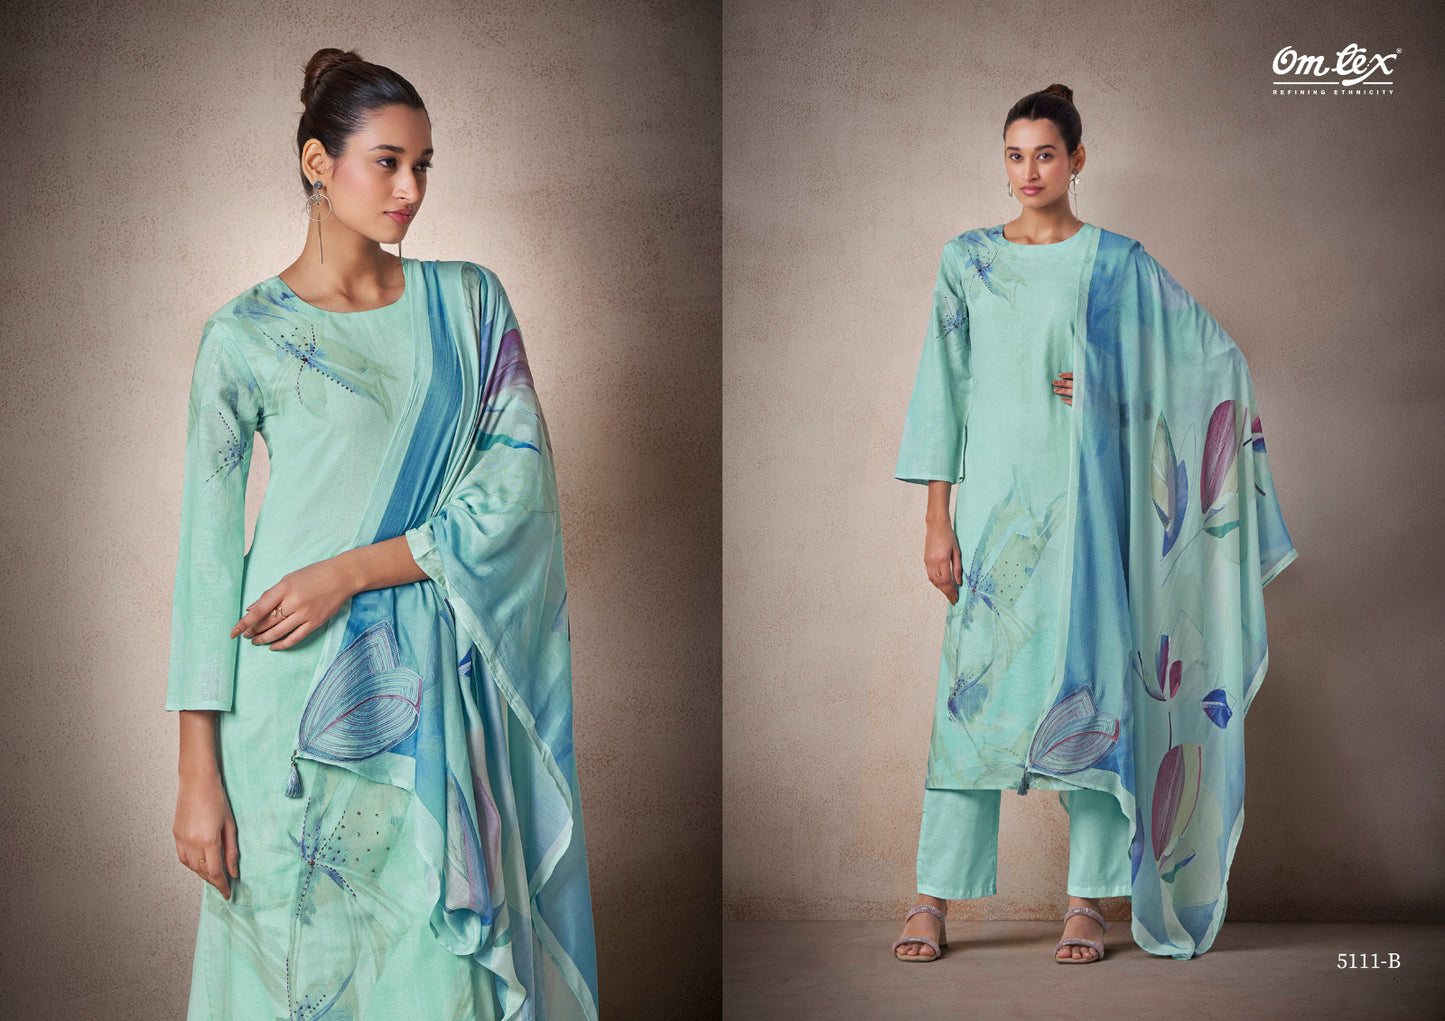 Srija Omtex Linen Pant Style Suits Supplier Gujarat